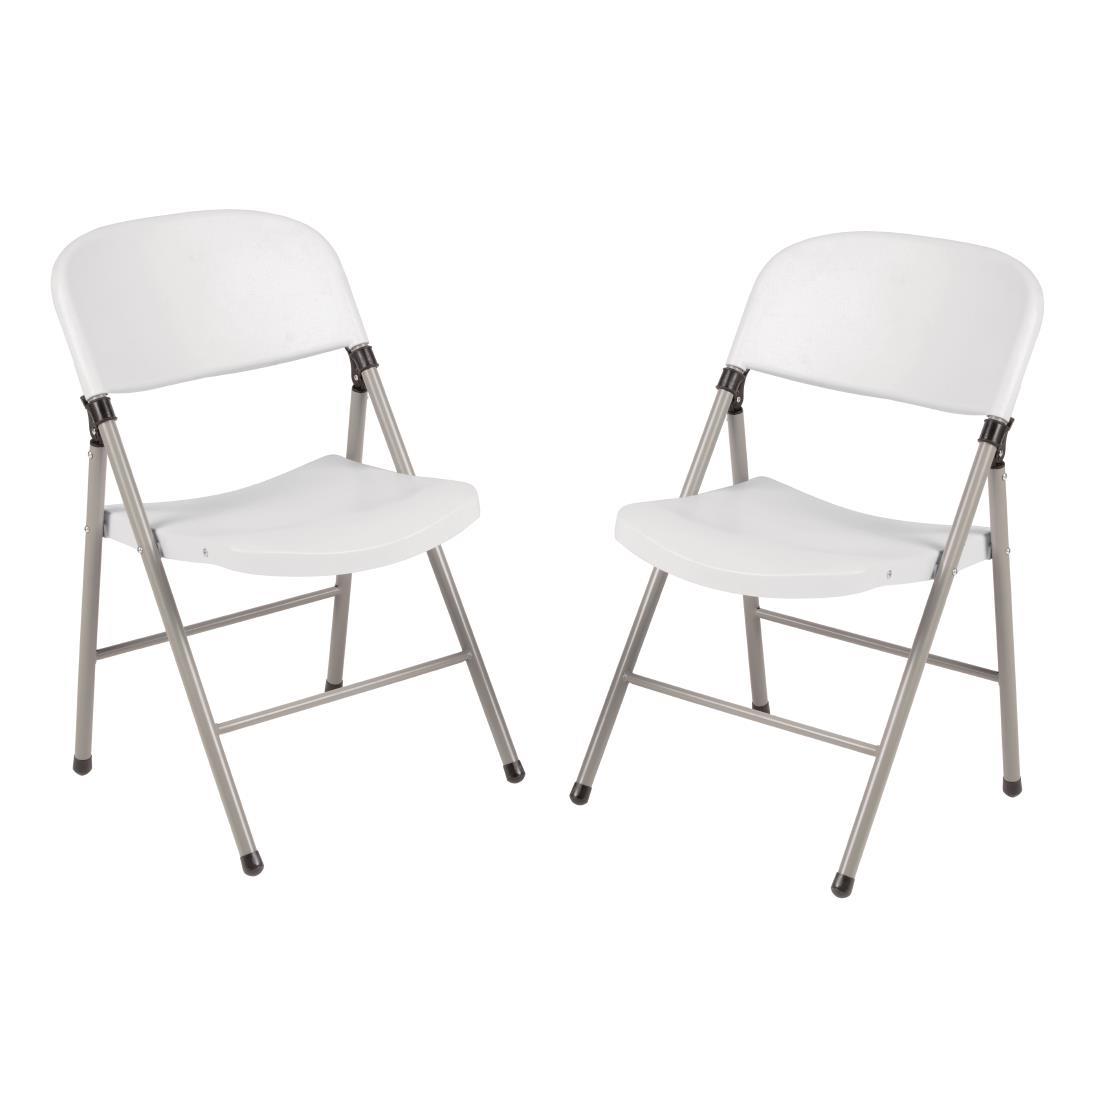 Bolero Foldaway Utility Chairs White (Pack of 2) - CE692  - 4